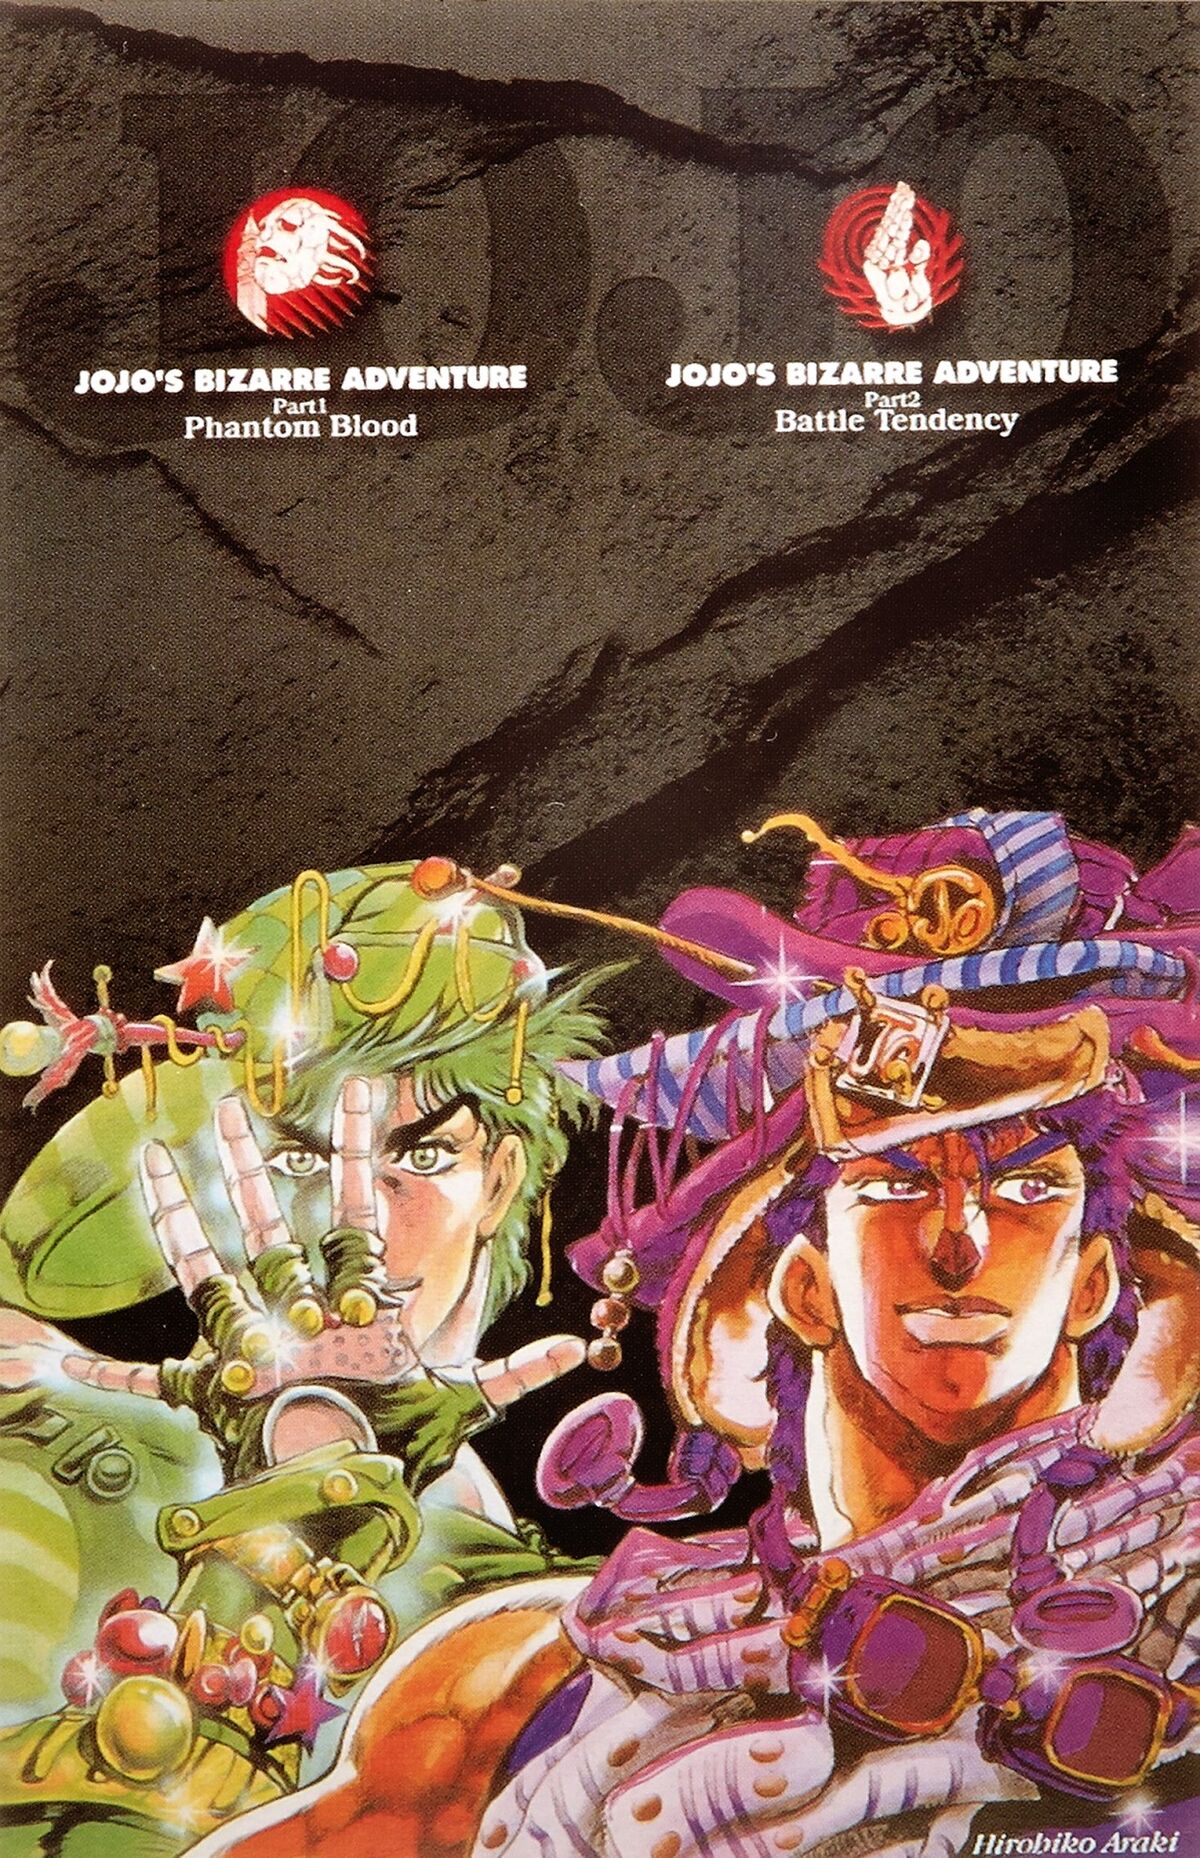 Jojo's Bizarre Adventure Part 5 The Golden Wind Vol 1-8 Collection 8 B